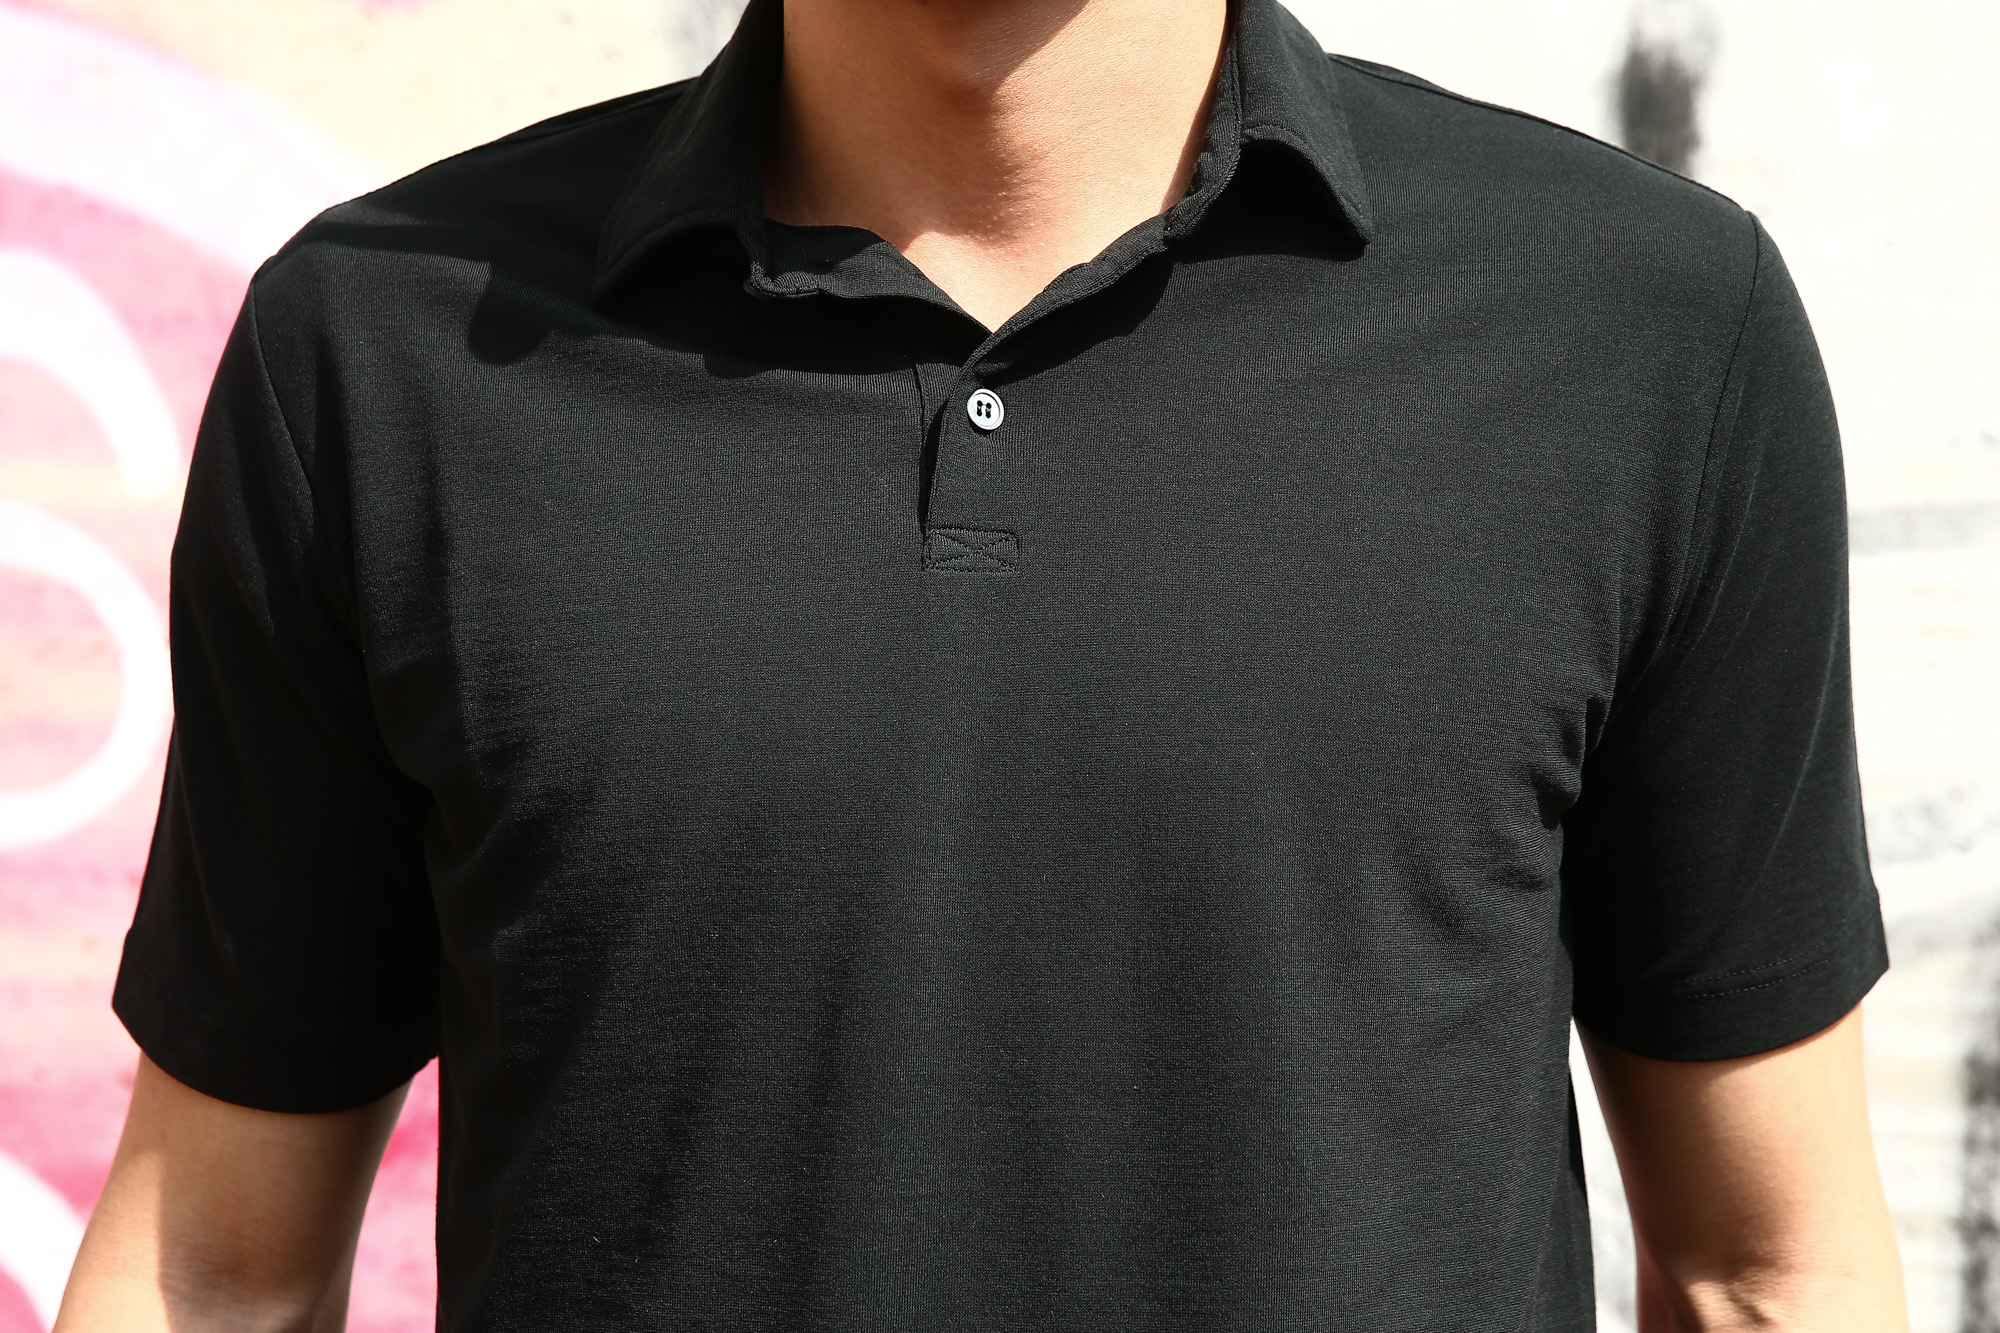 ZANONE (ザノーネ) Polo Shirt ice cotton アイスコットン ポロシャツ BLACK (ブラック・Z0015) made in italy (イタリア製) 2018 春夏新作 愛知 名古屋 Alto e Diritto アルト エ デリット ポロ ニットポロ